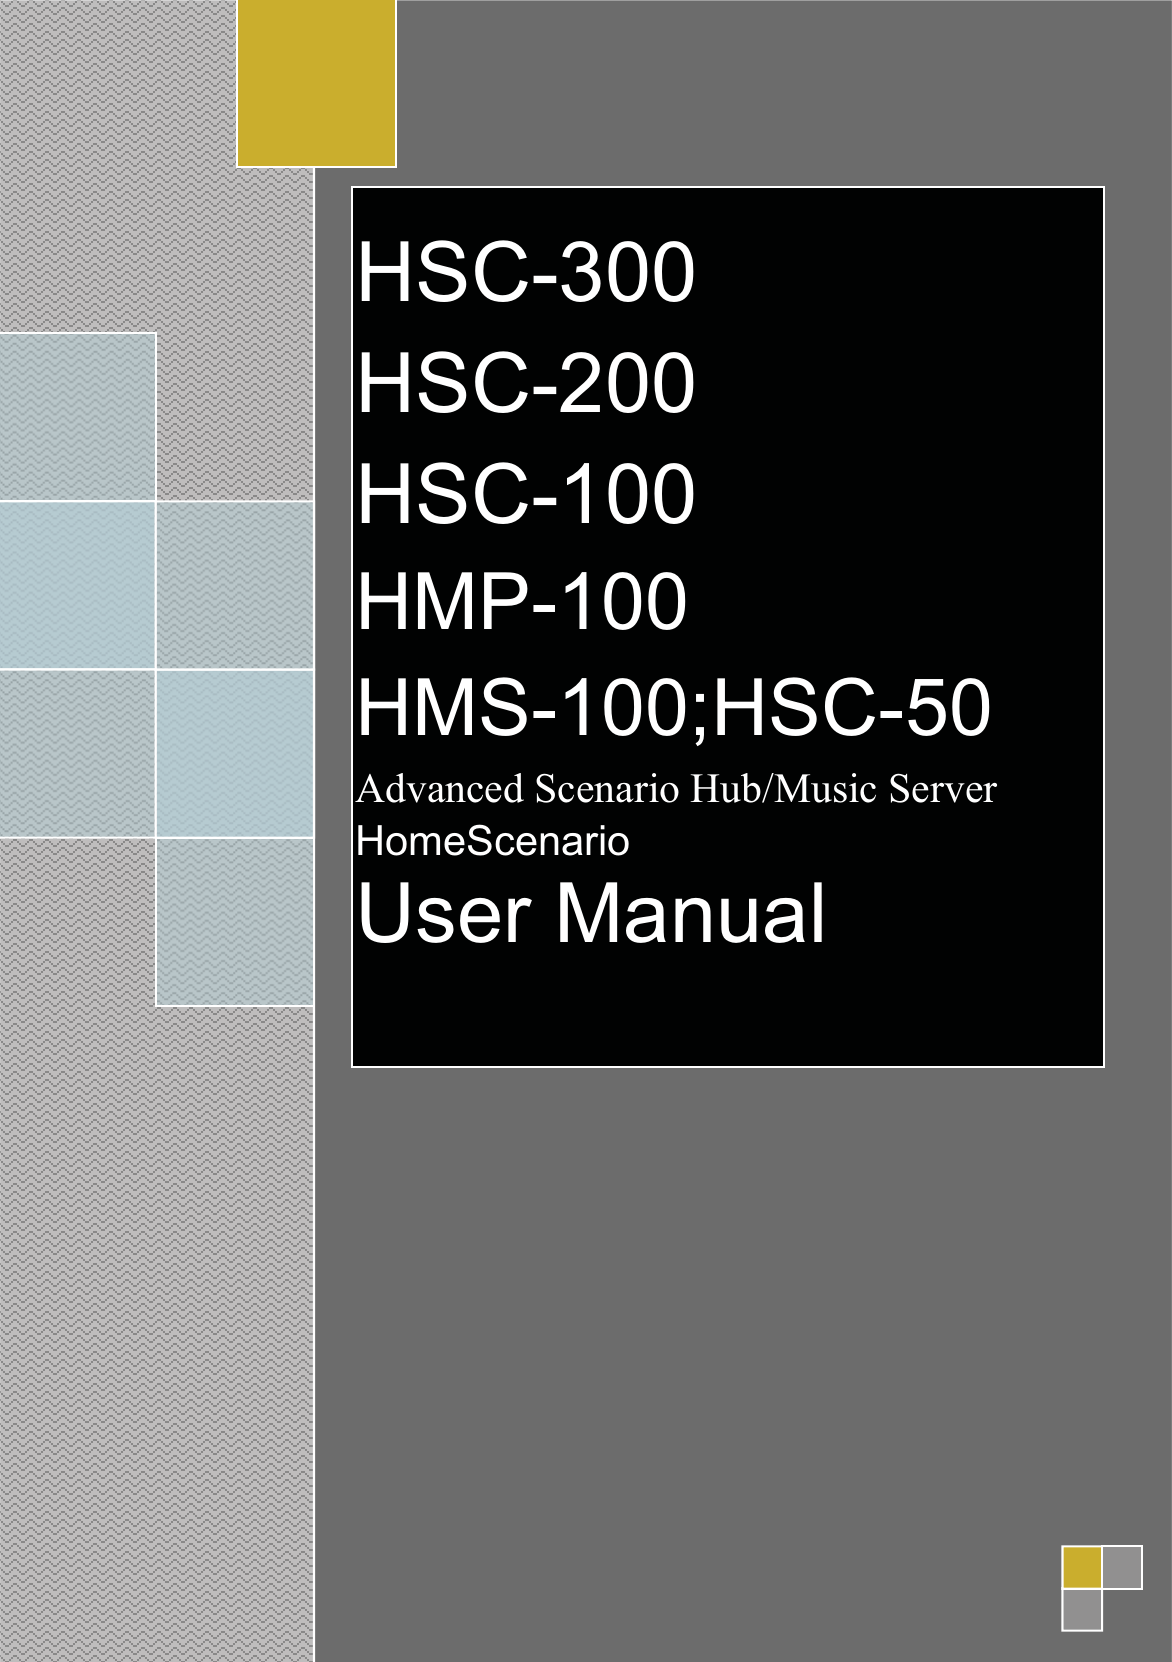 HSC-300HSC-200HSC-100HMP-100HMS-100 Server User Manual 2009YC WangHome Scenario Inc2008/7/31HSC-300HSC-200HSC-100HMP-100HMS-100;HSC-50Advanced Scenario Hub/Music ServerHomeScenarioUser Manual